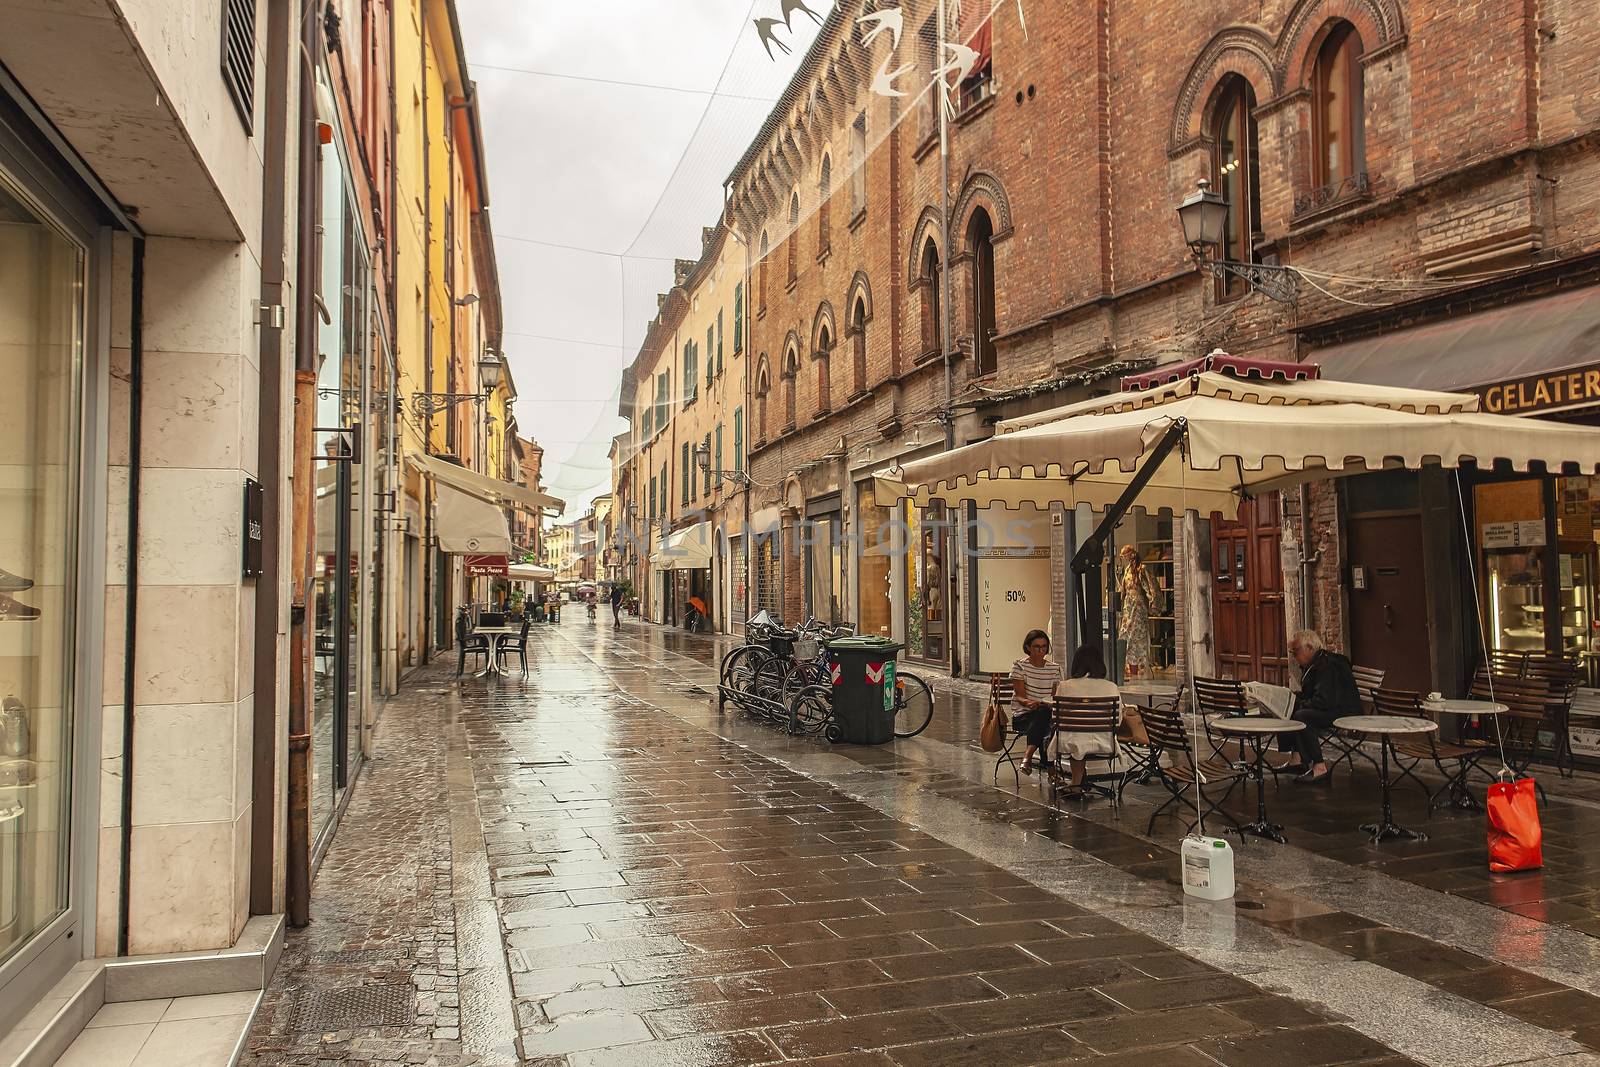 Alley with people walking in Ferrara in Italy by pippocarlot